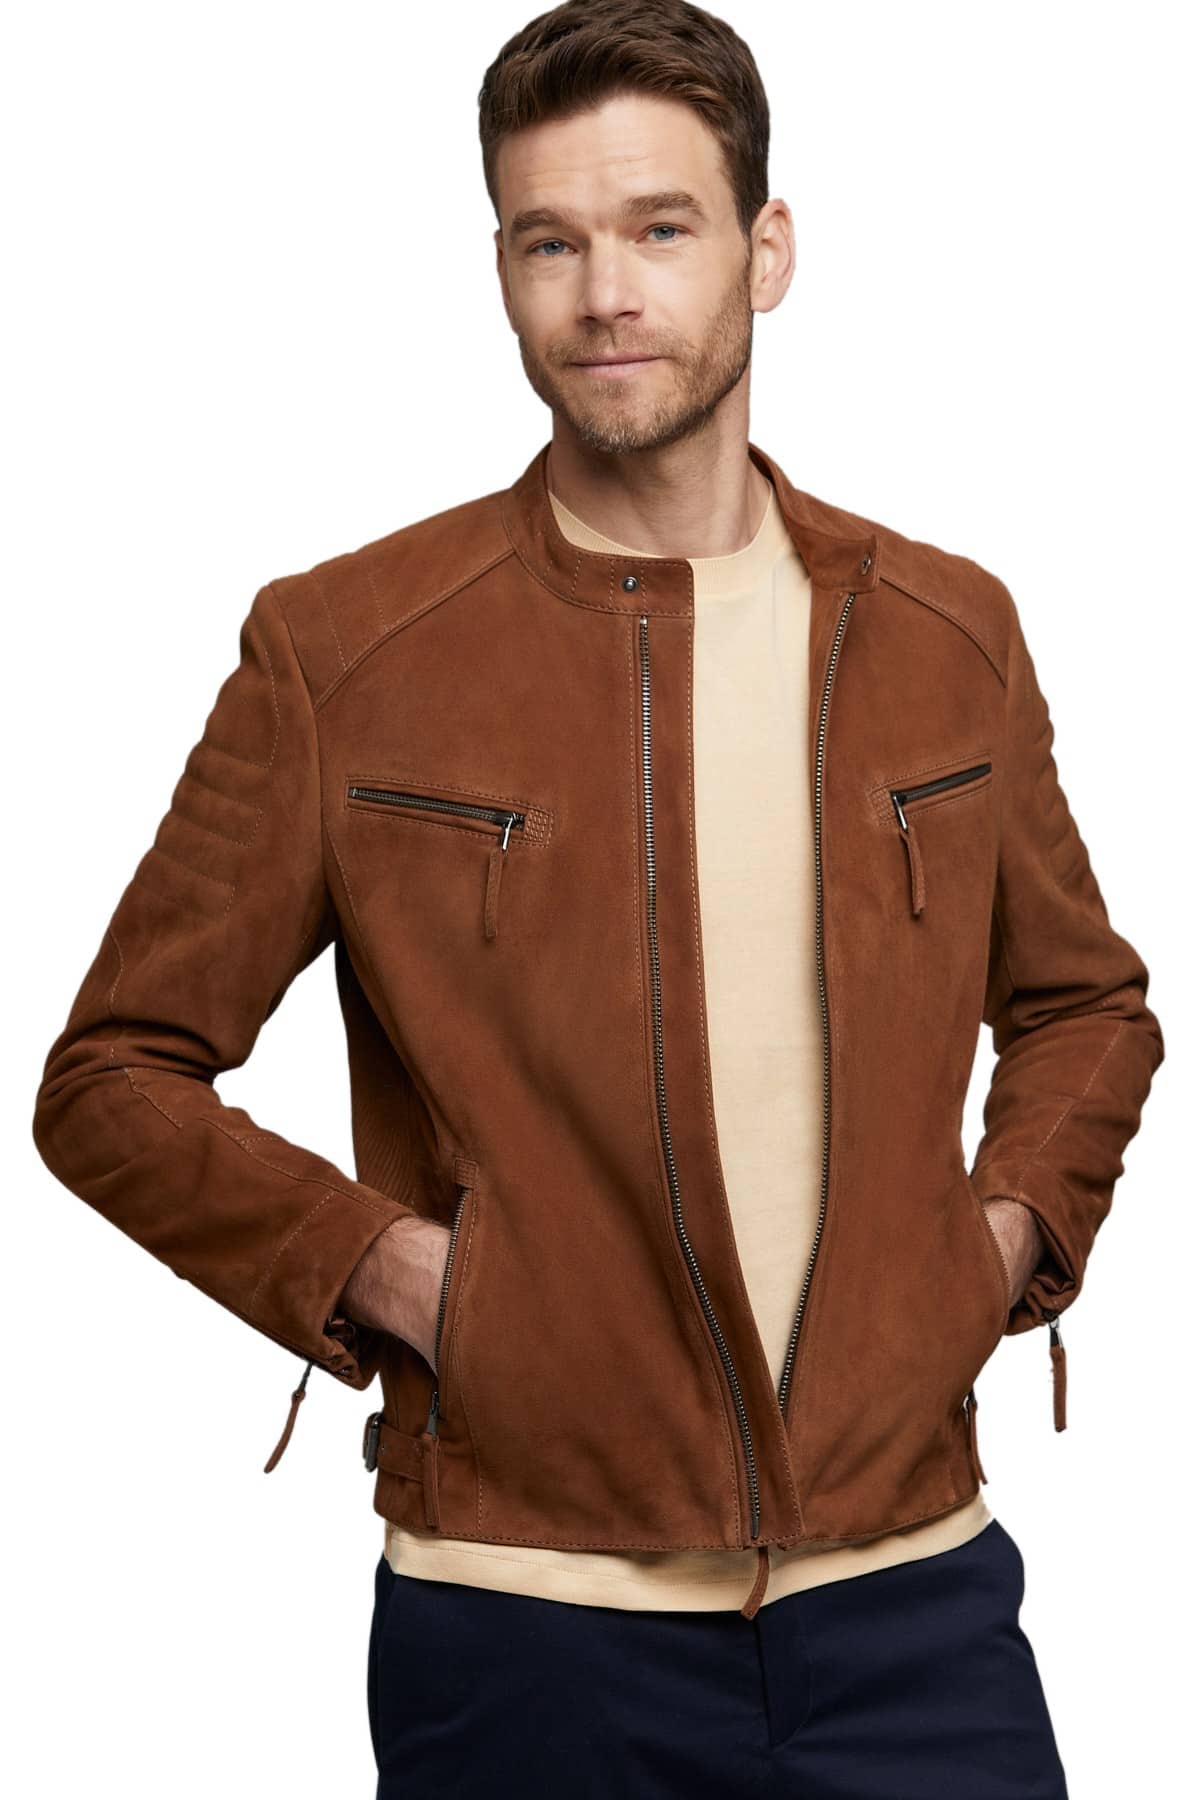 mens suede brown leather jacket in US 4